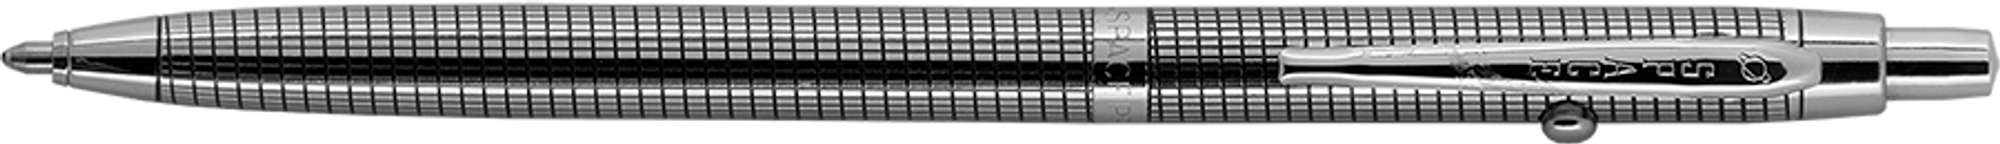 Fisher Space Pen Shuttle Black Grid Design